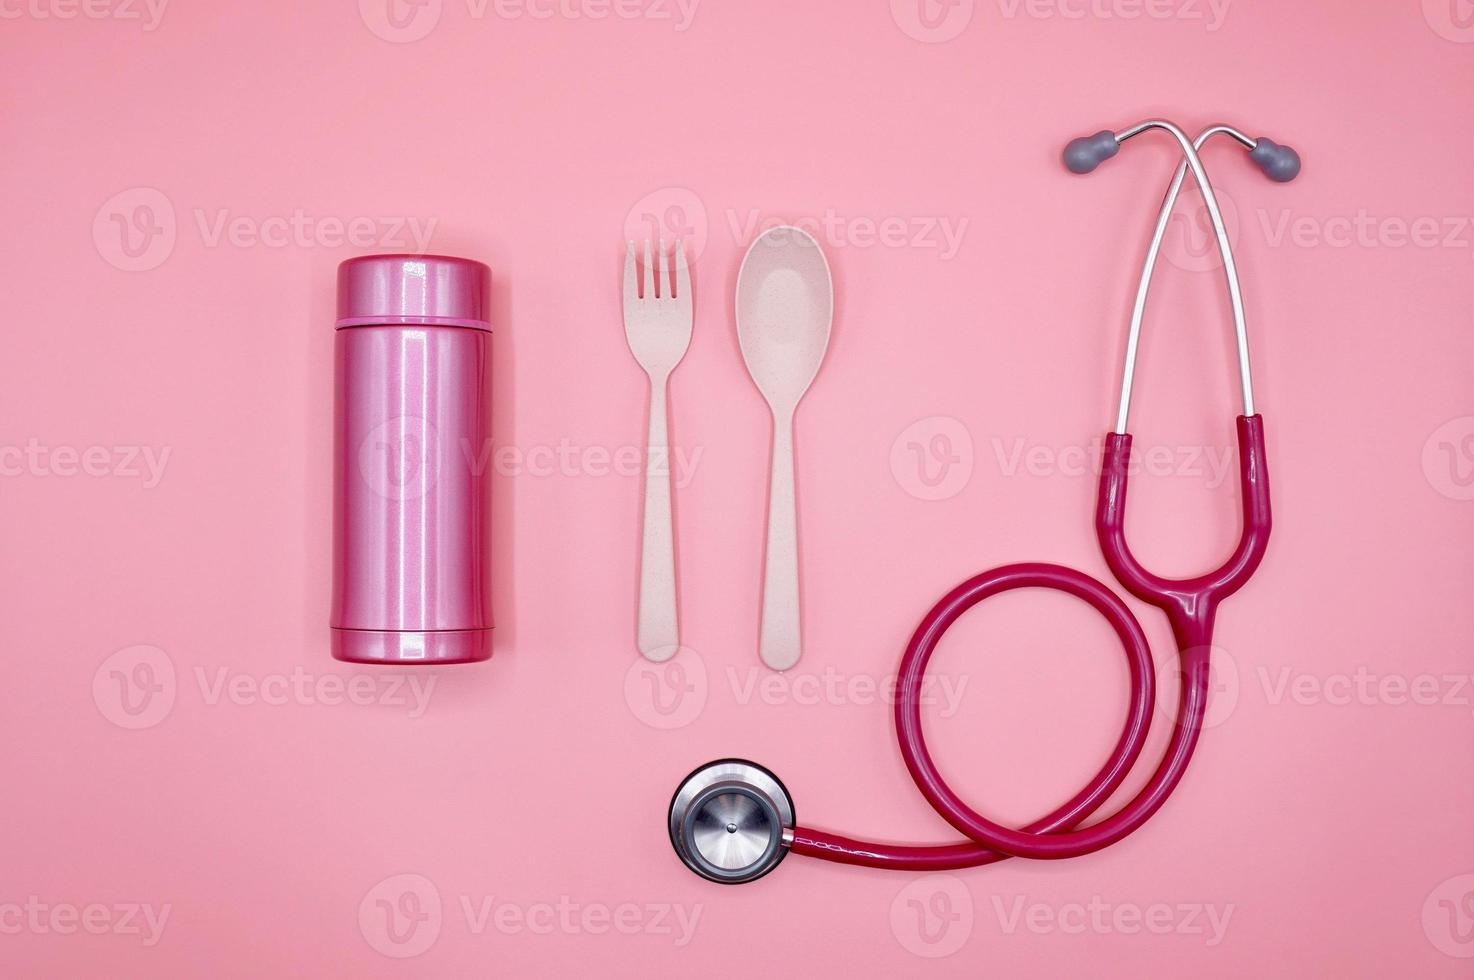 een roze stethoscoop, lepel, vork en thermosfles op de roze achtergrond, platte lay-out foto